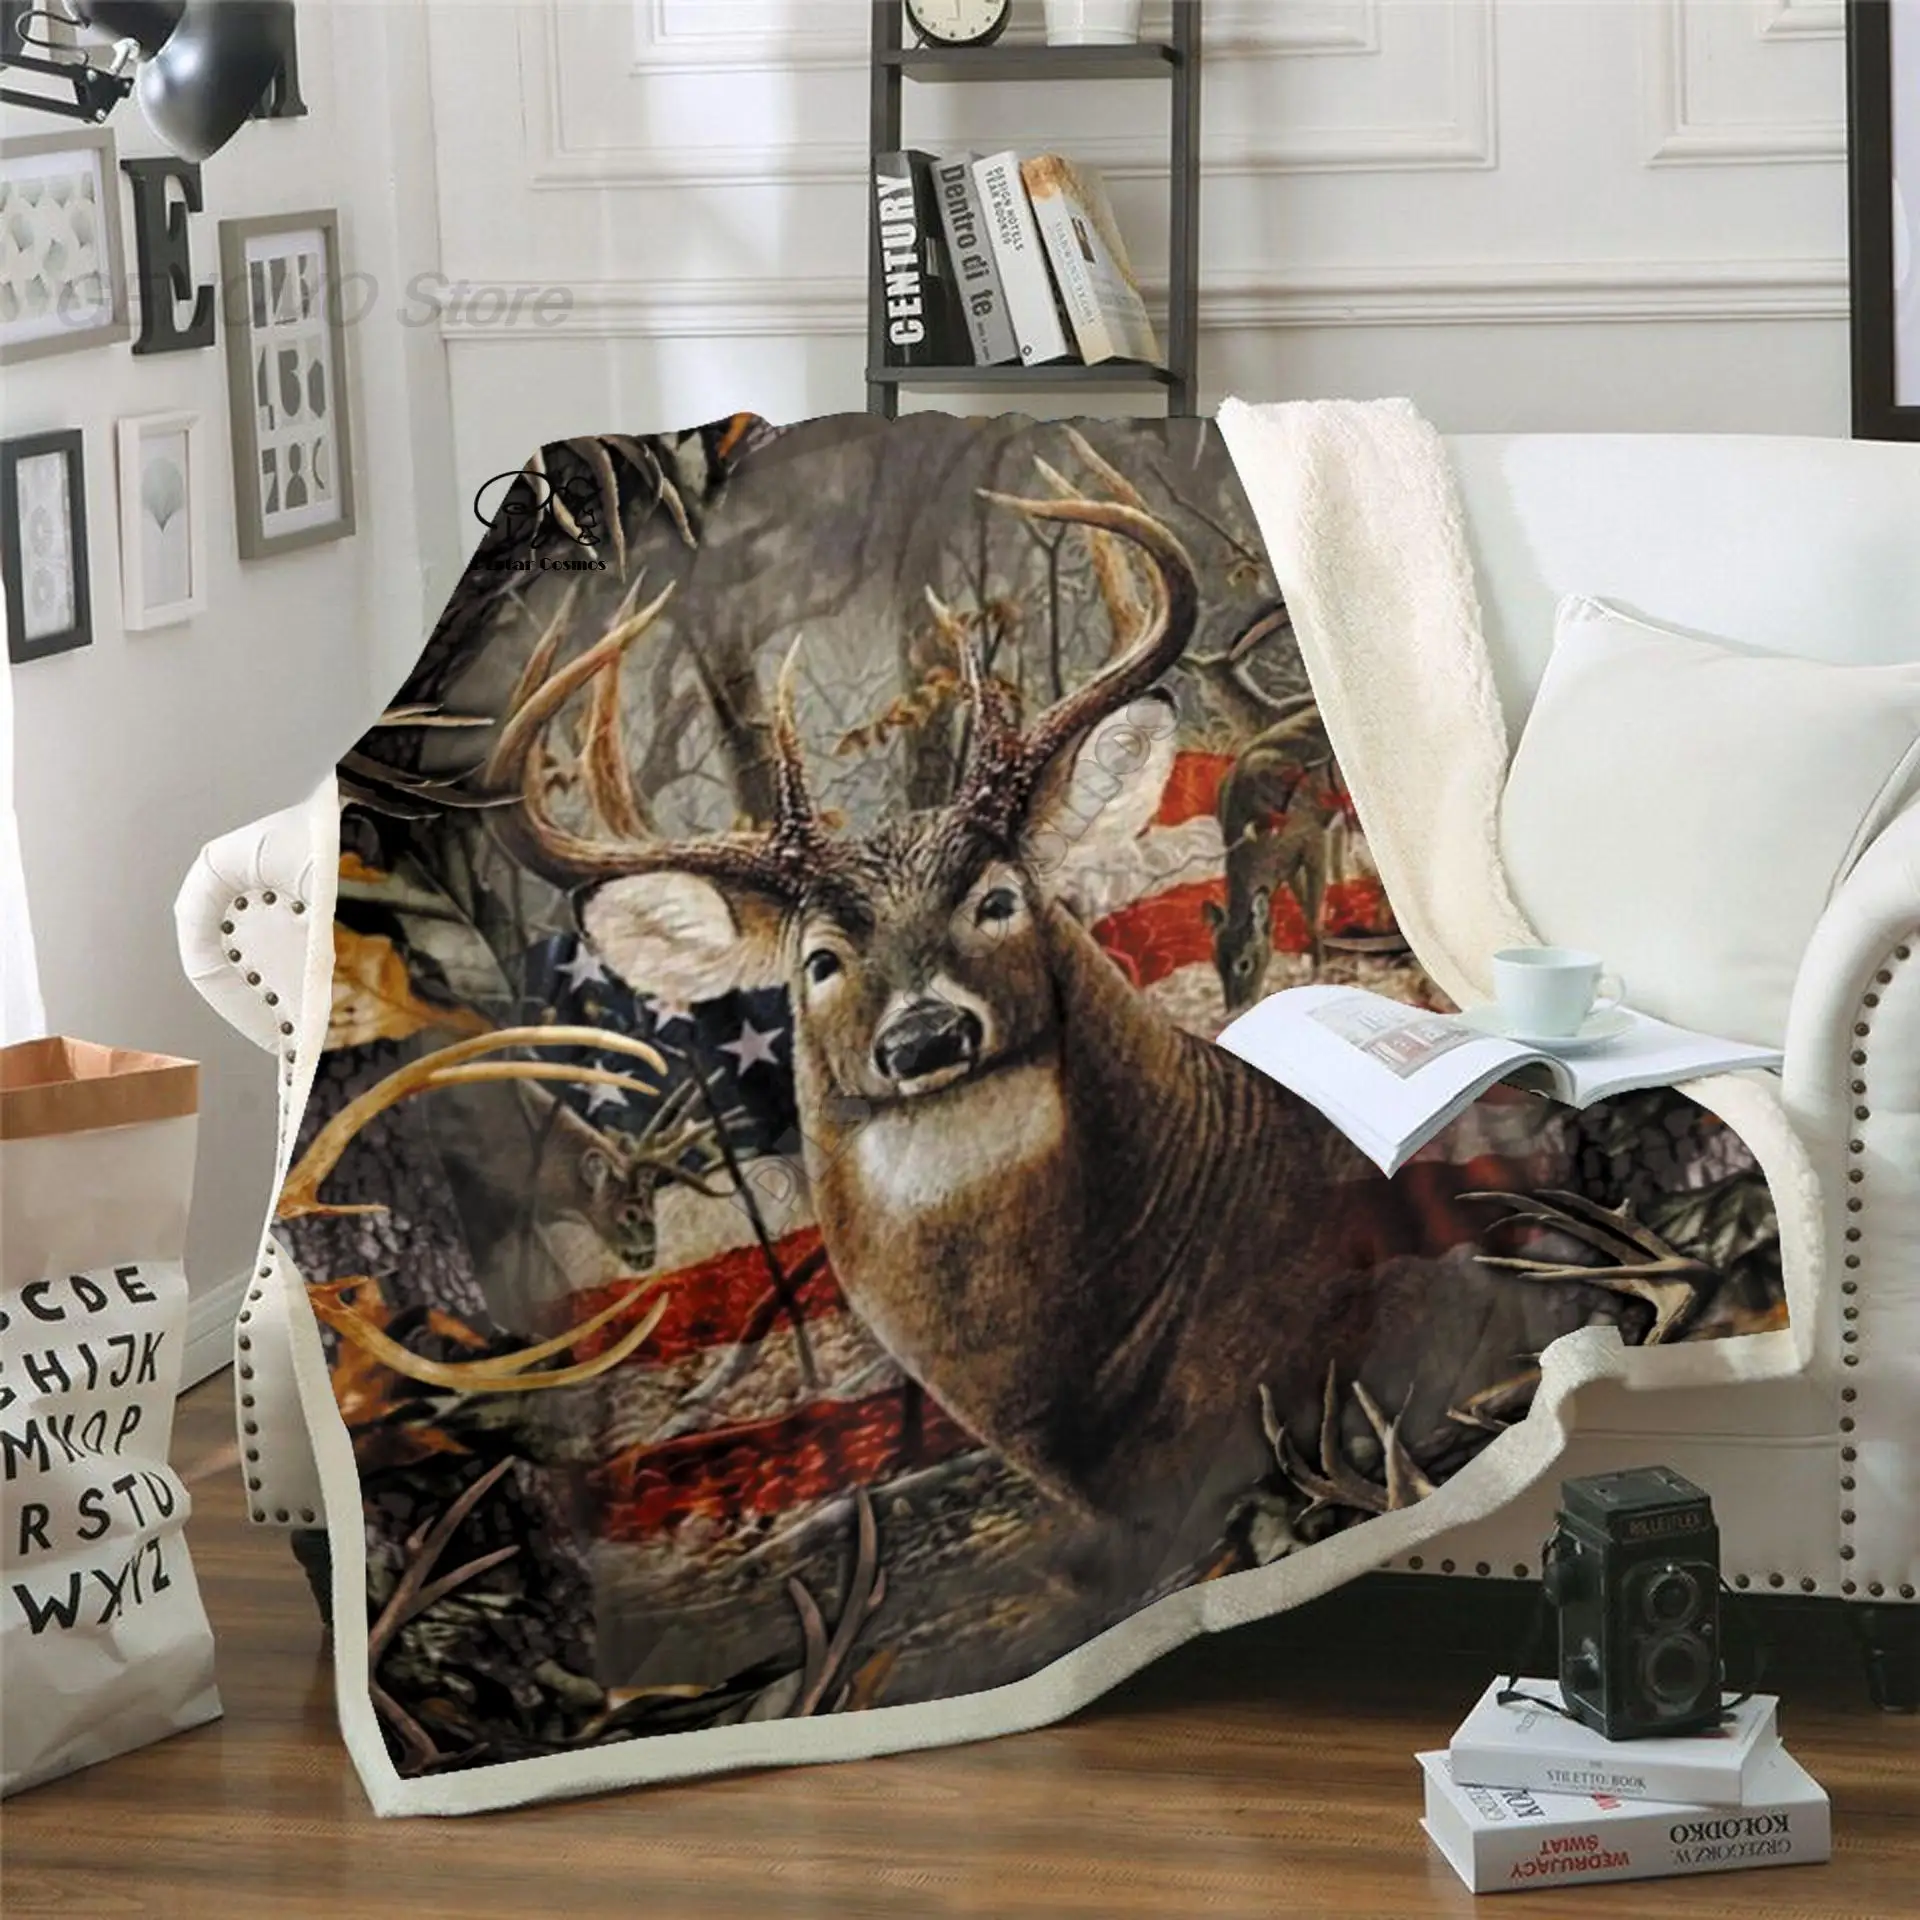 

Plstar Cosmos Deer Hunter Fasan Jagd charakter Decke 3D drucken Sherpa Decke auf dem Bett Hause Textilien Traumhafte stil-4